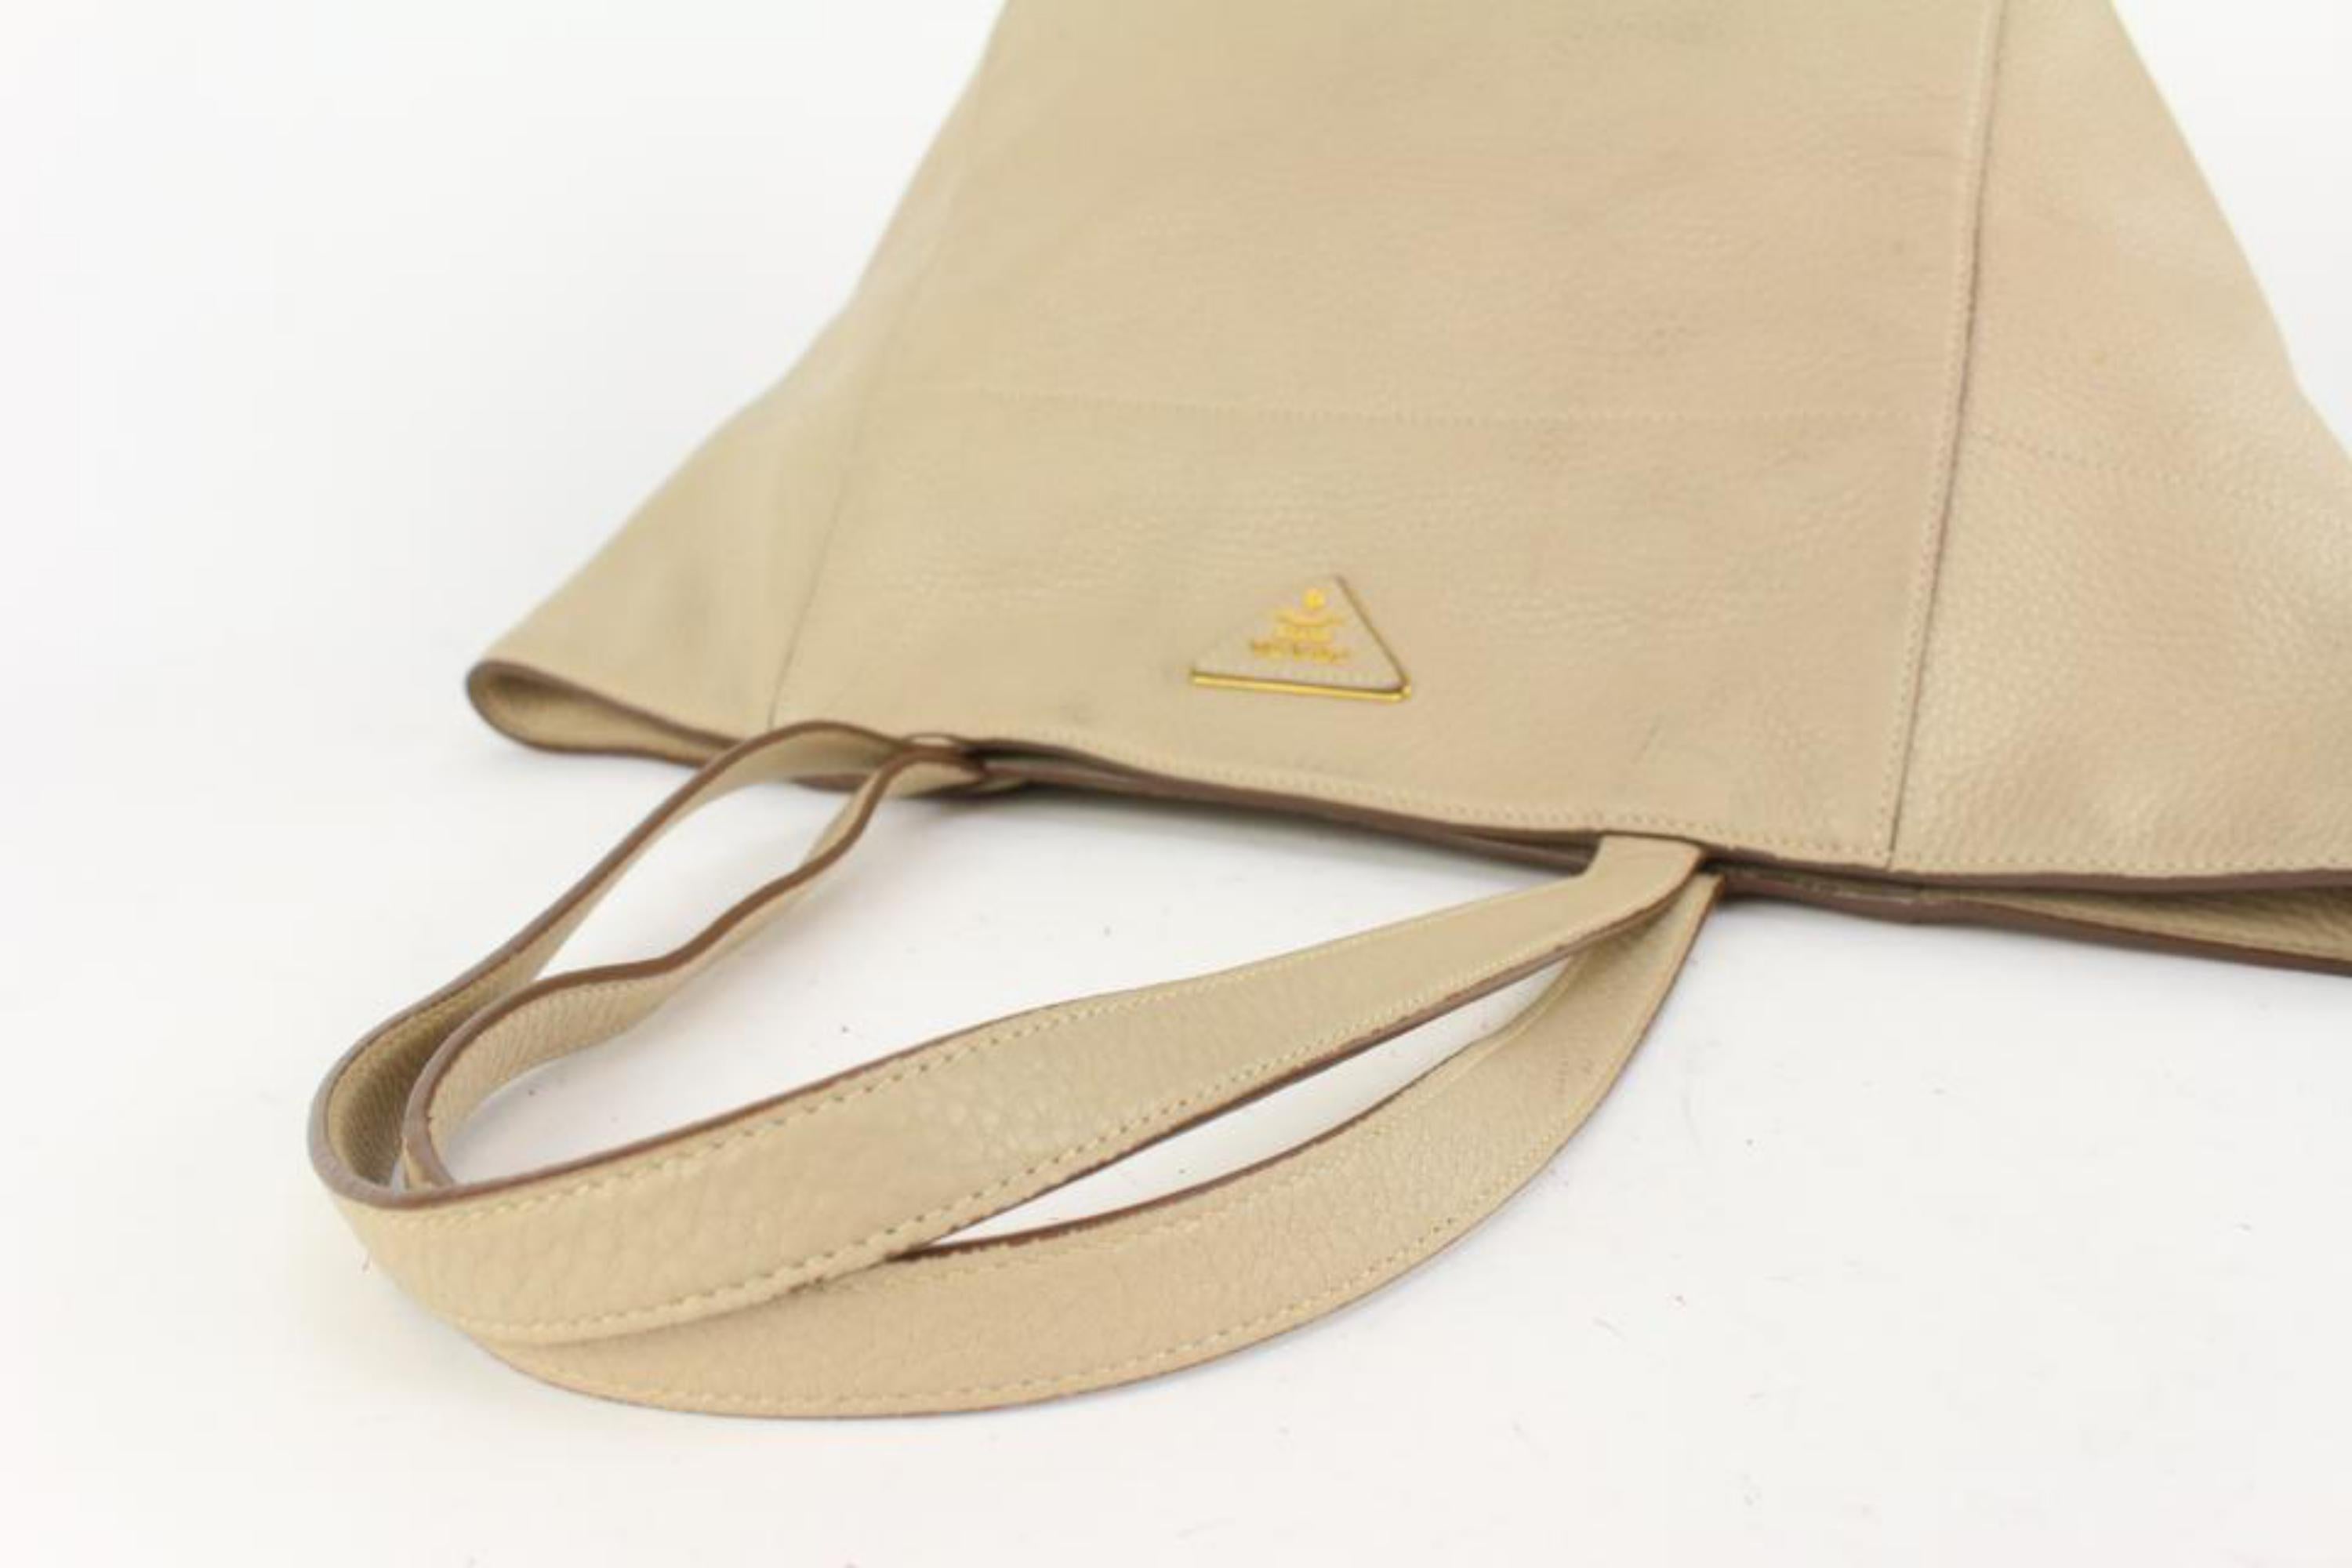 Prada - Nude Leather Bucket Bag With Shoulder Strap